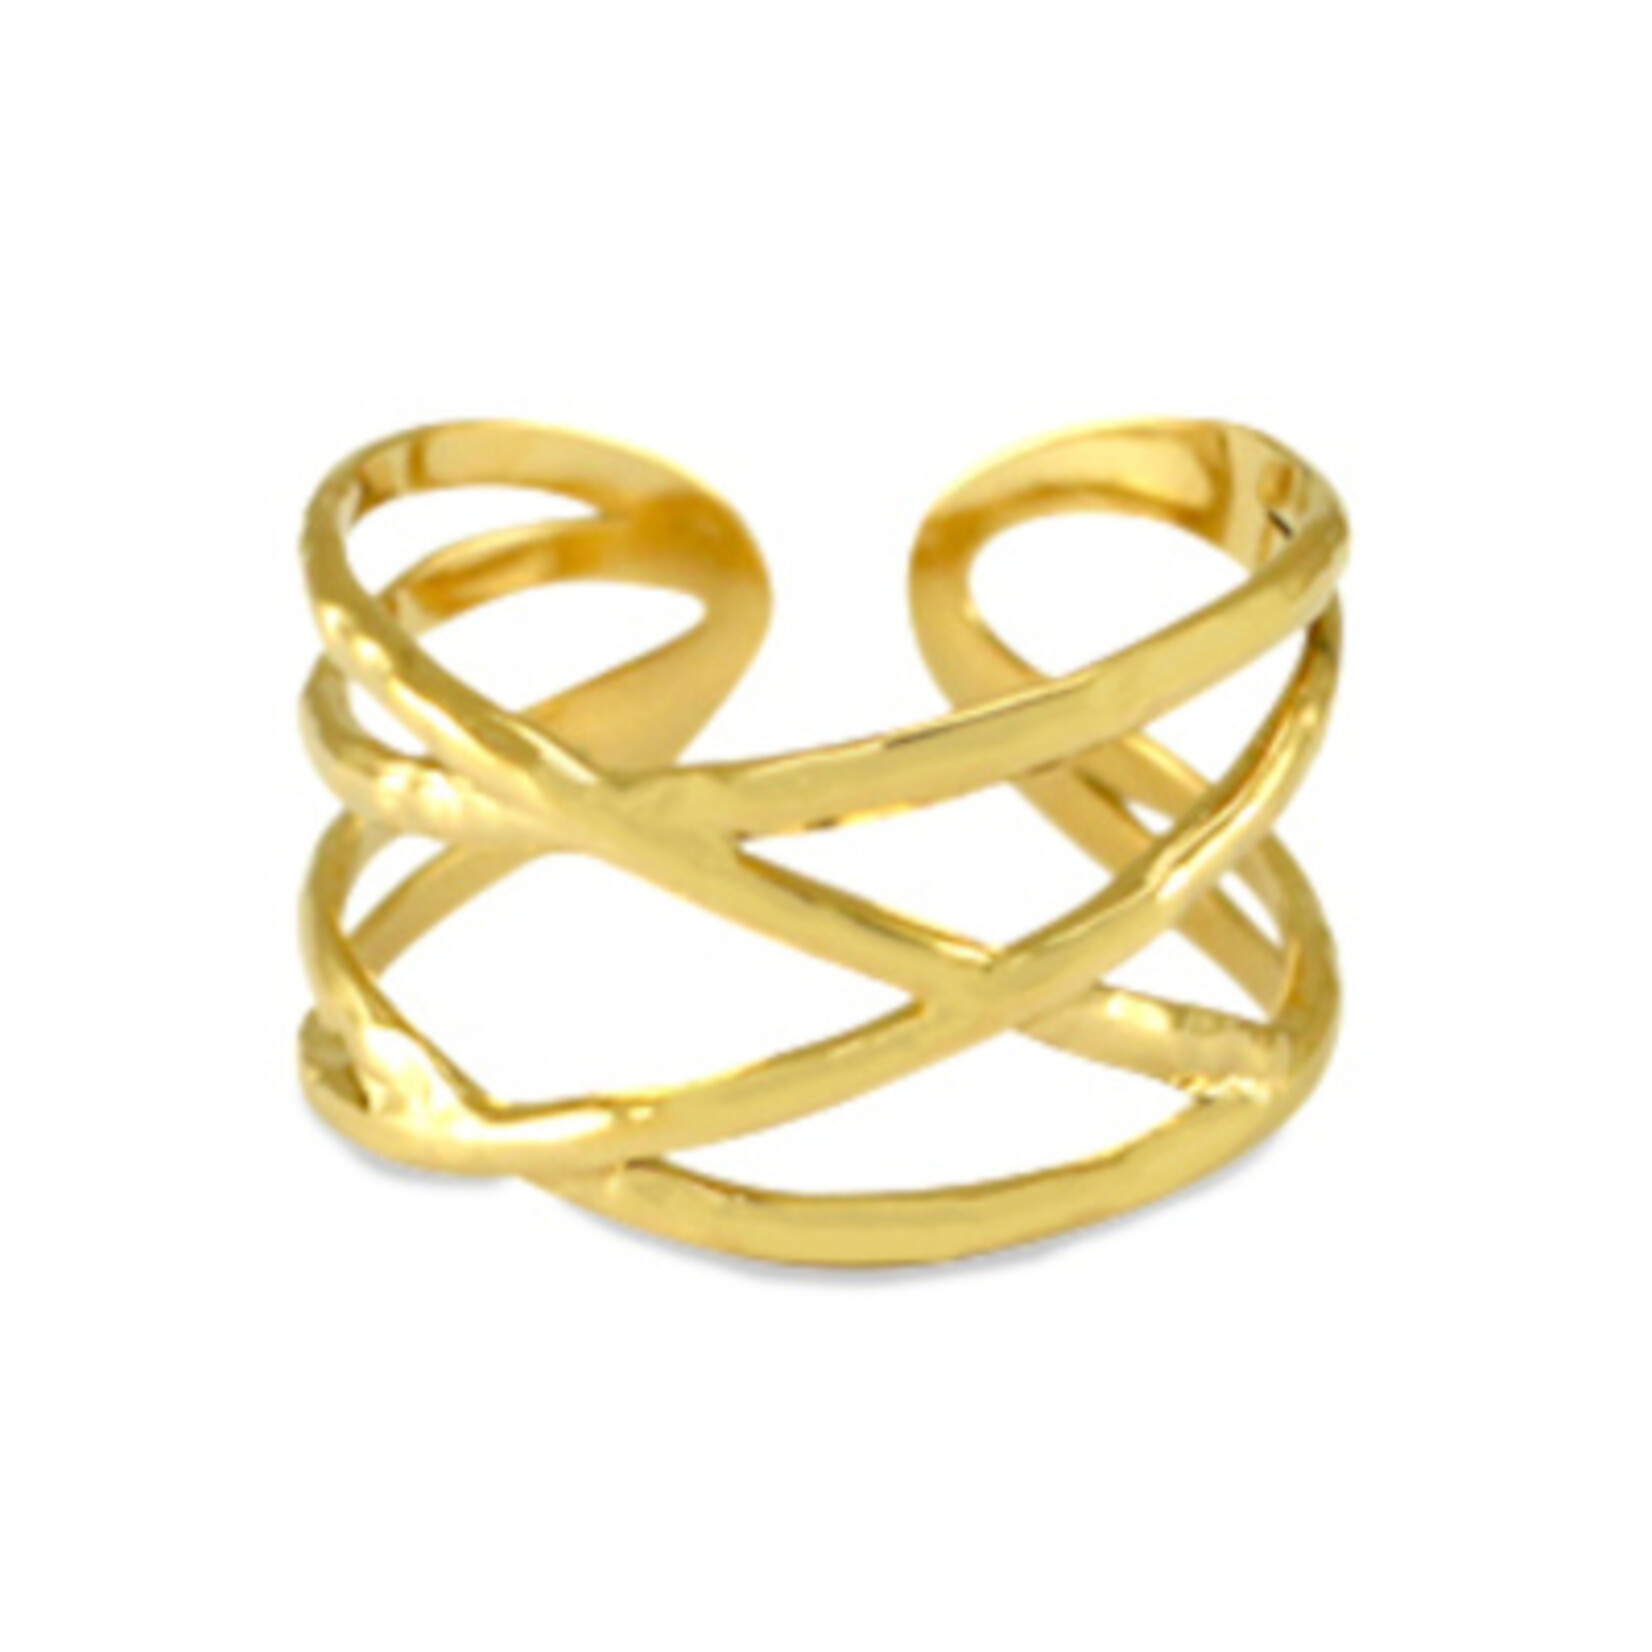 Ring stainless steel goud breed gevlochten